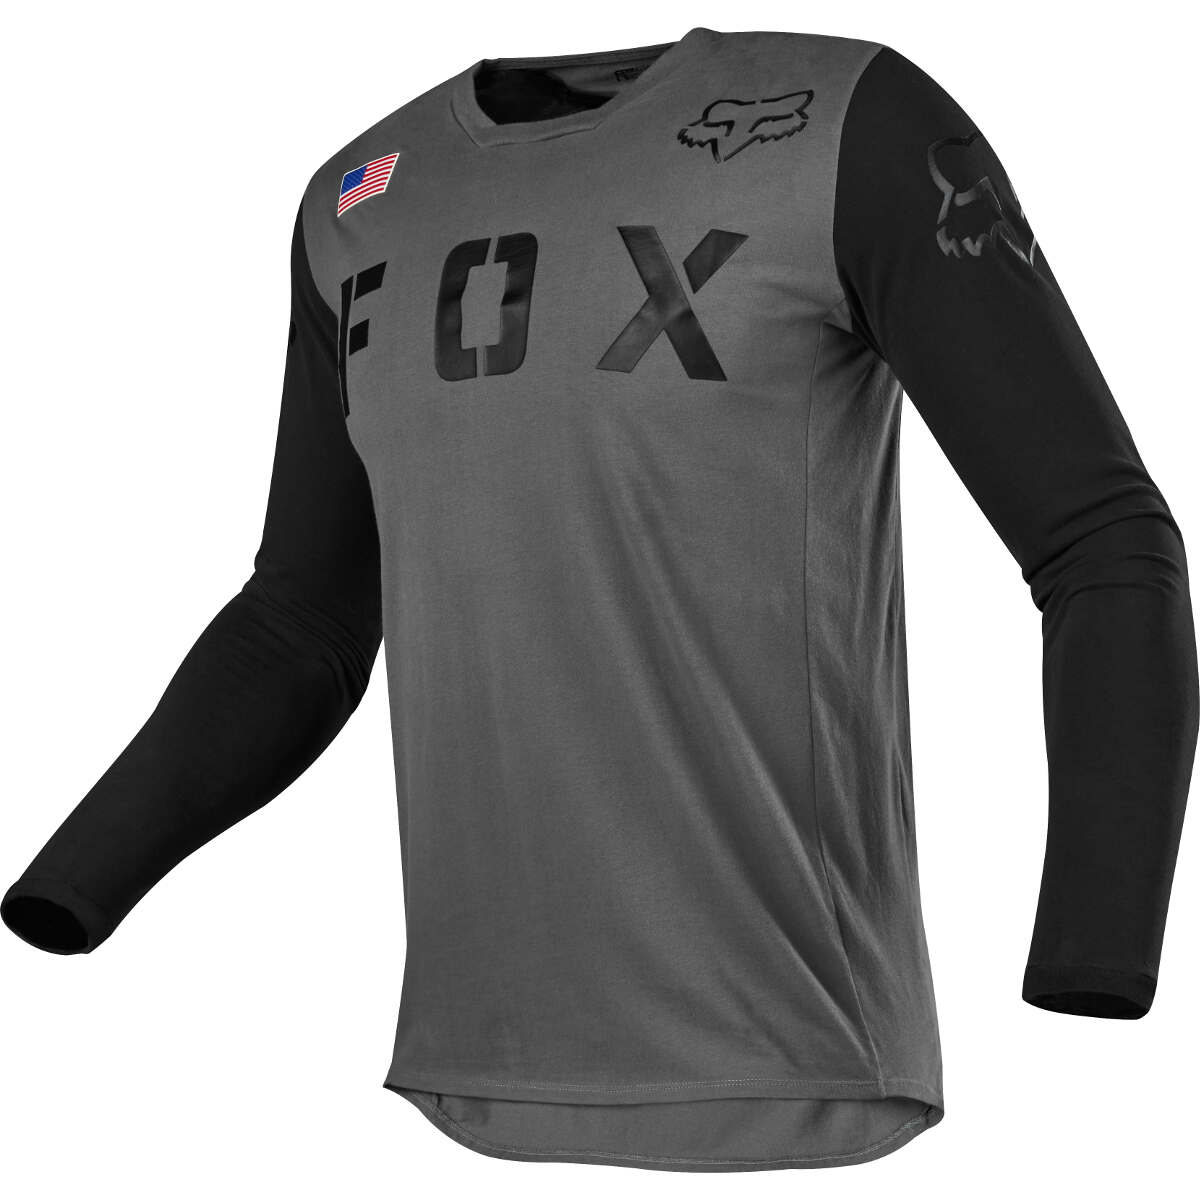 Fox Jersey 180 Grey/Black - Special Edition San Diego